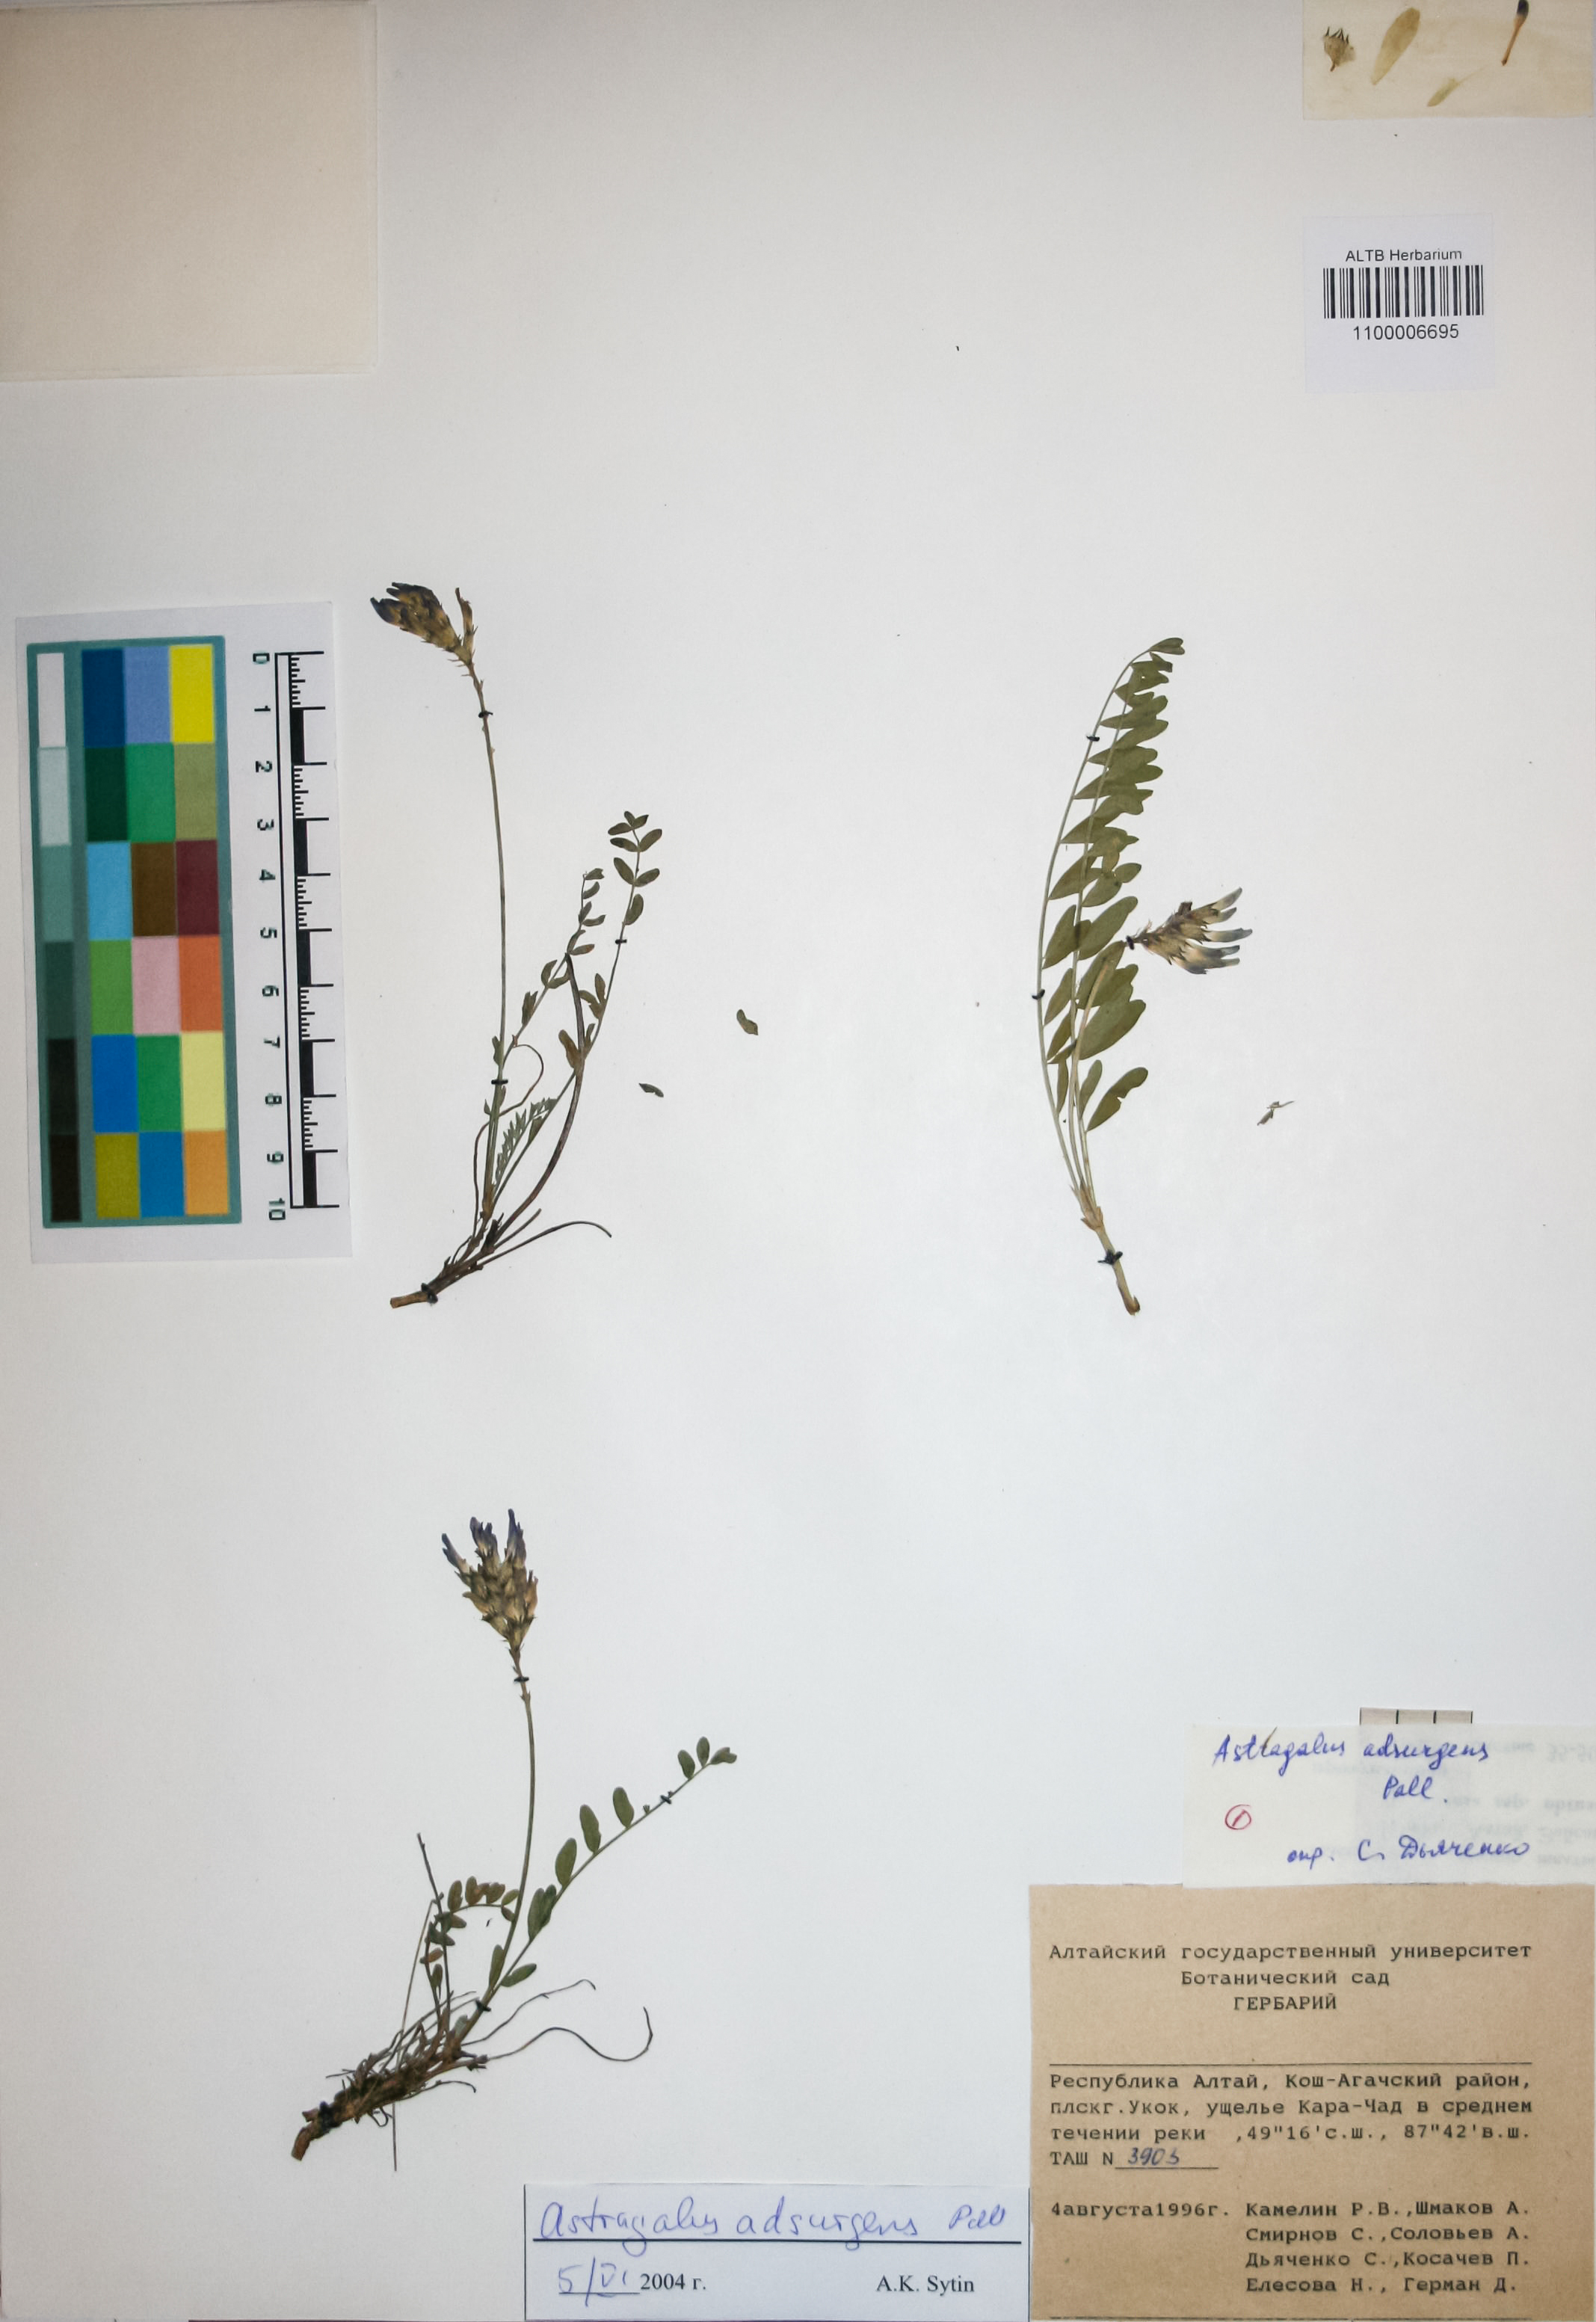 Fabaceae,Astragalus adsurgens Pall.